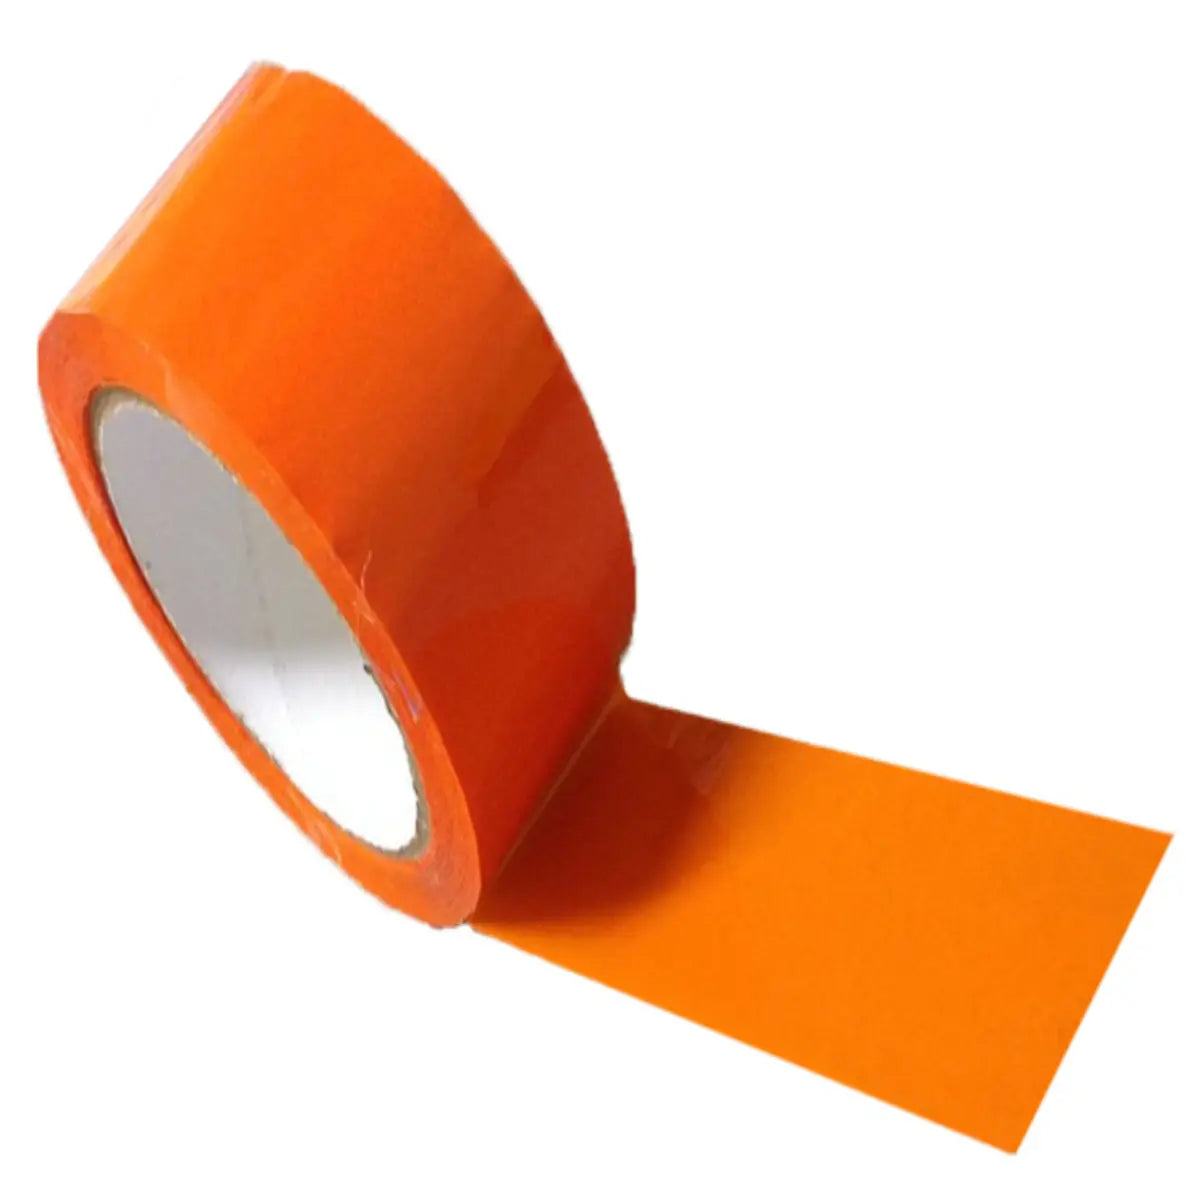 coloured adhesive tape - orange